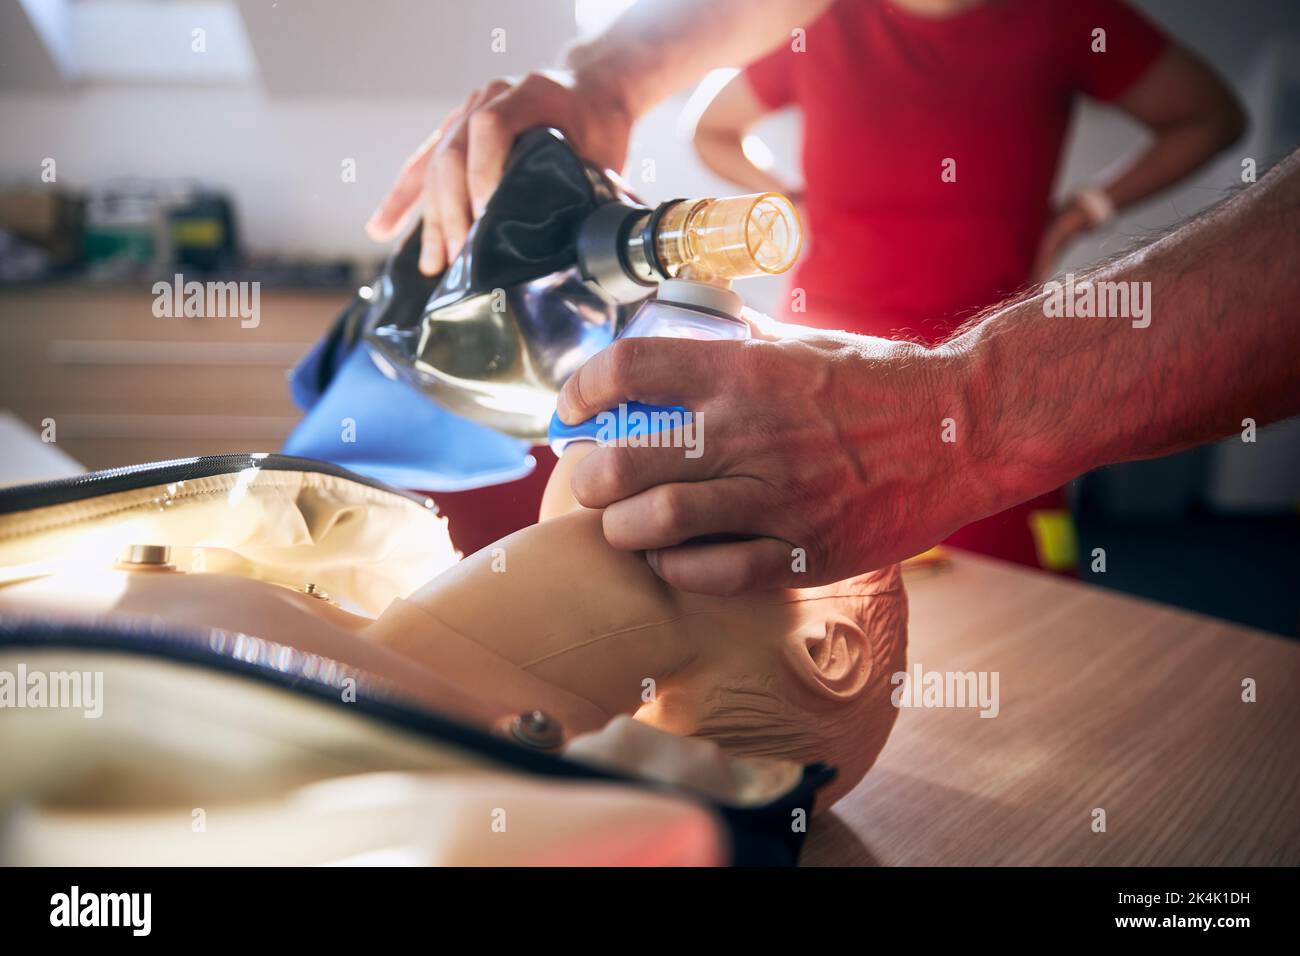 Paramedic of emergency medical service training resuscitation procedure on child dummy. Stock Photo